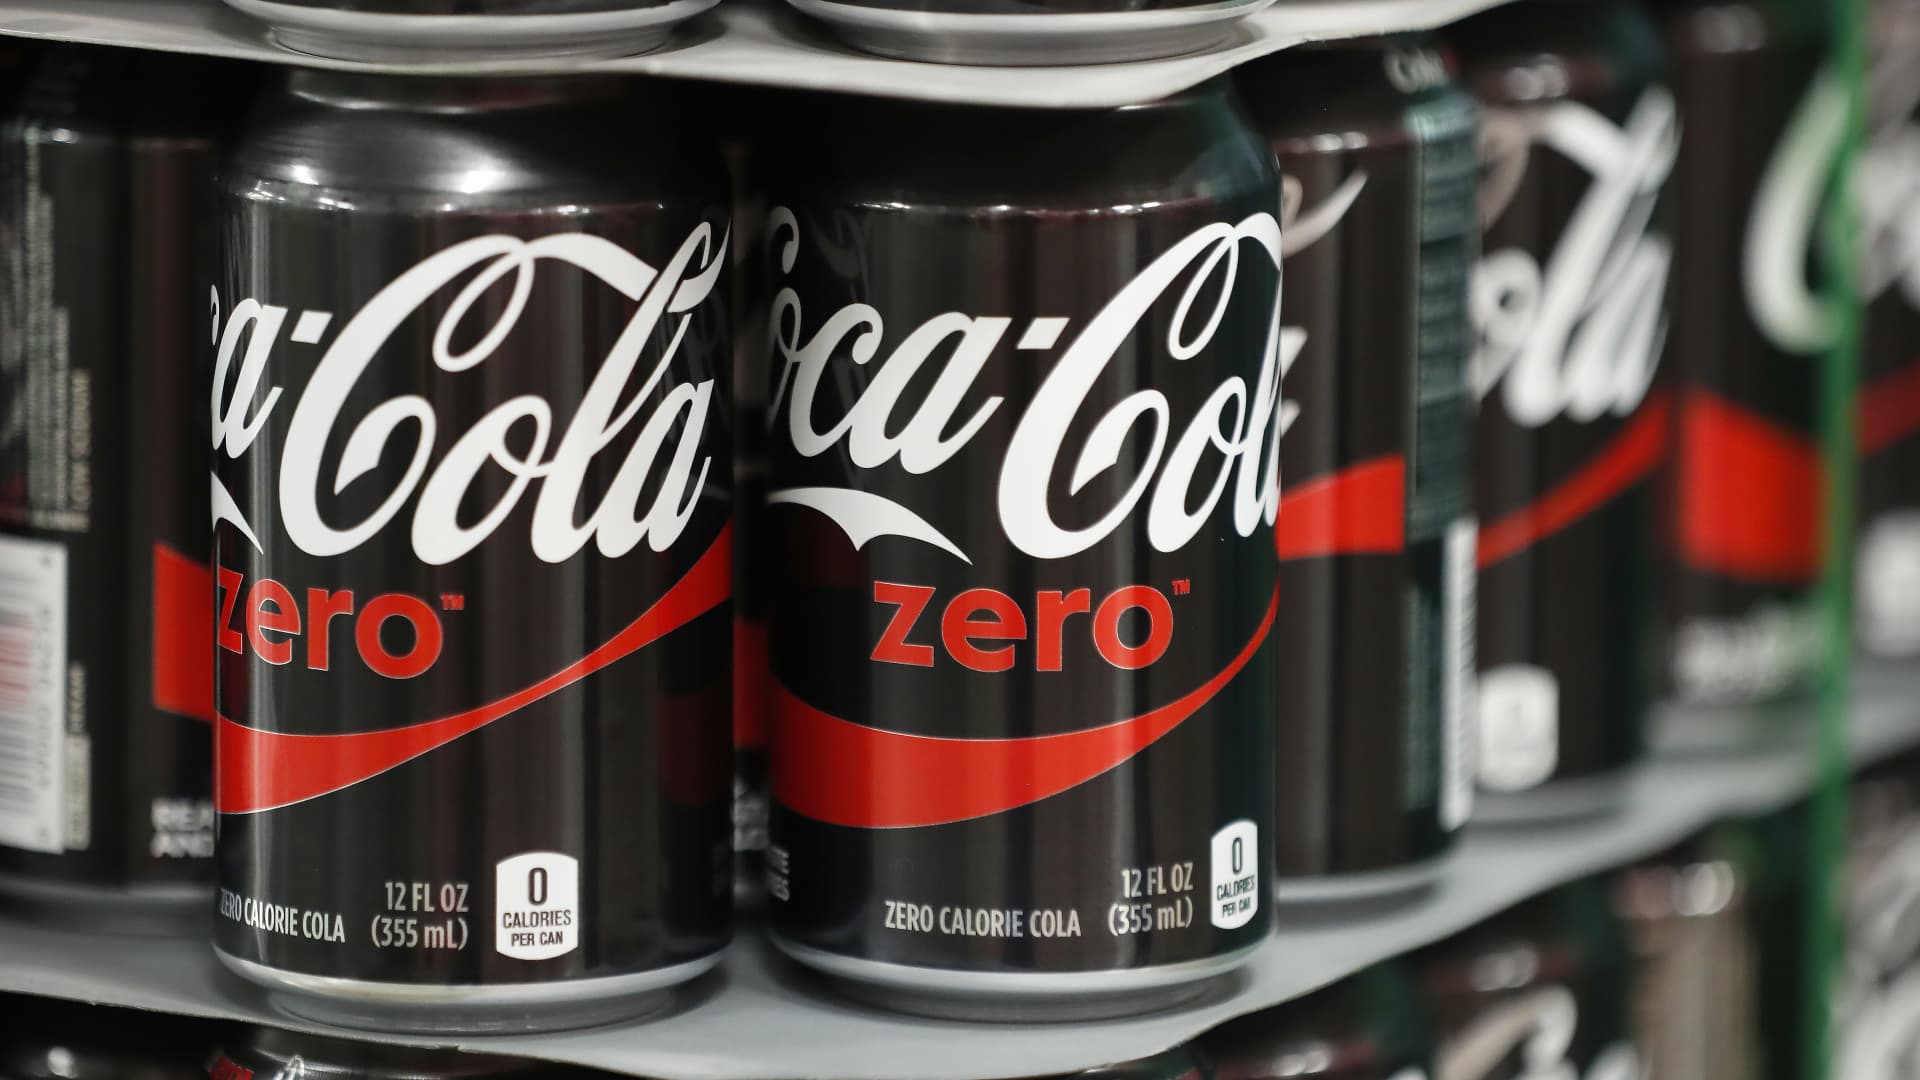 Coca-Cola revamps Coke Zero into Coca-Cola Zero Sugar overseas